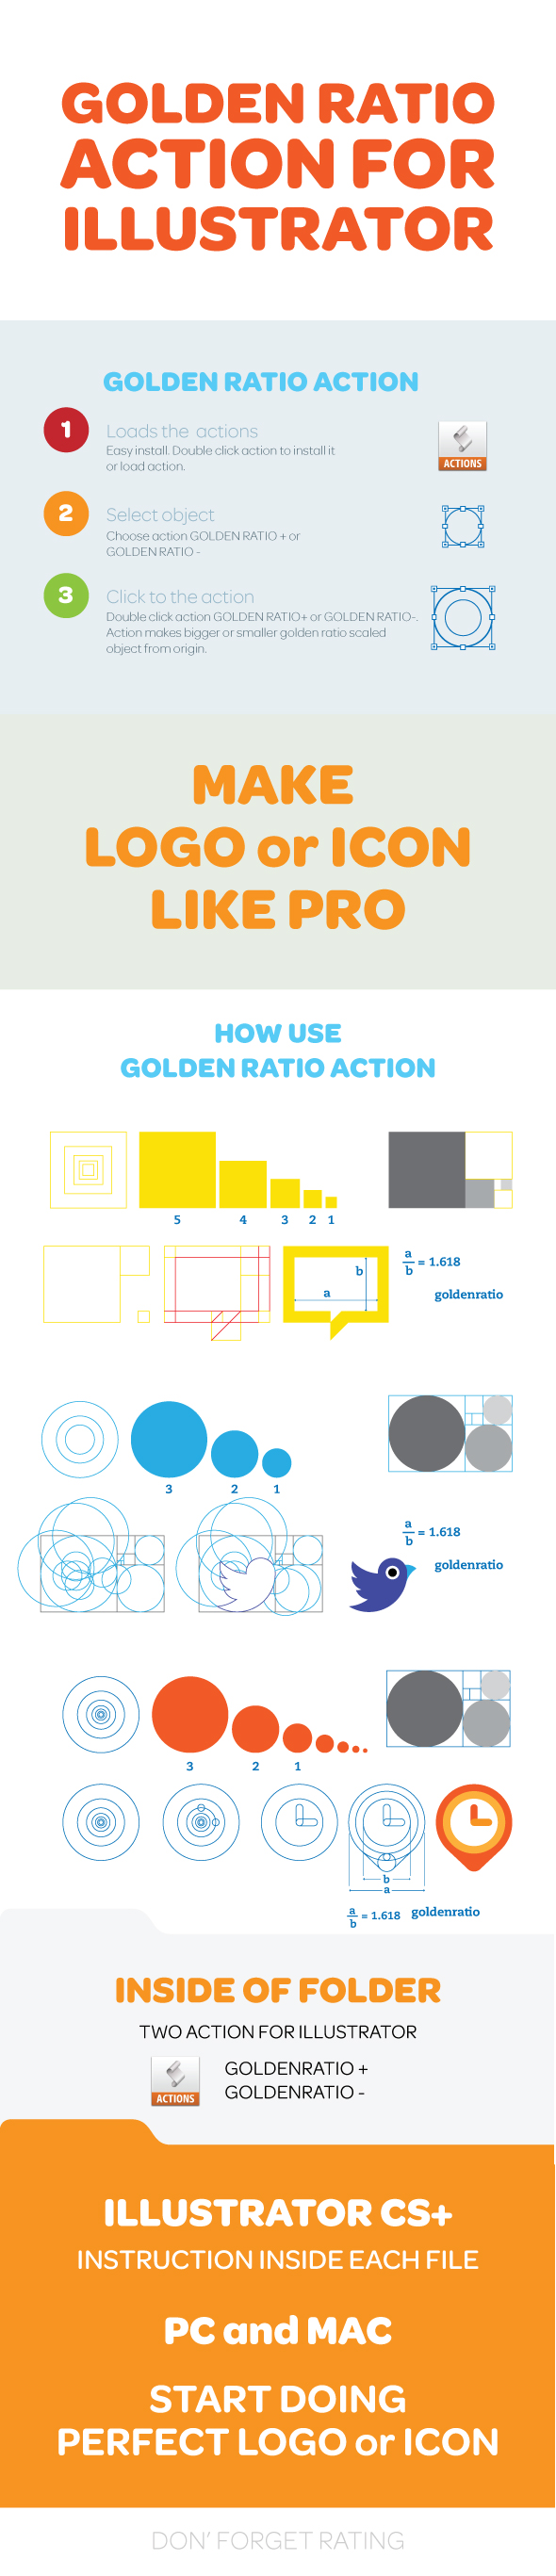 Golden Ratio Illustrator Action by heavydesignforce | GraphicRiver